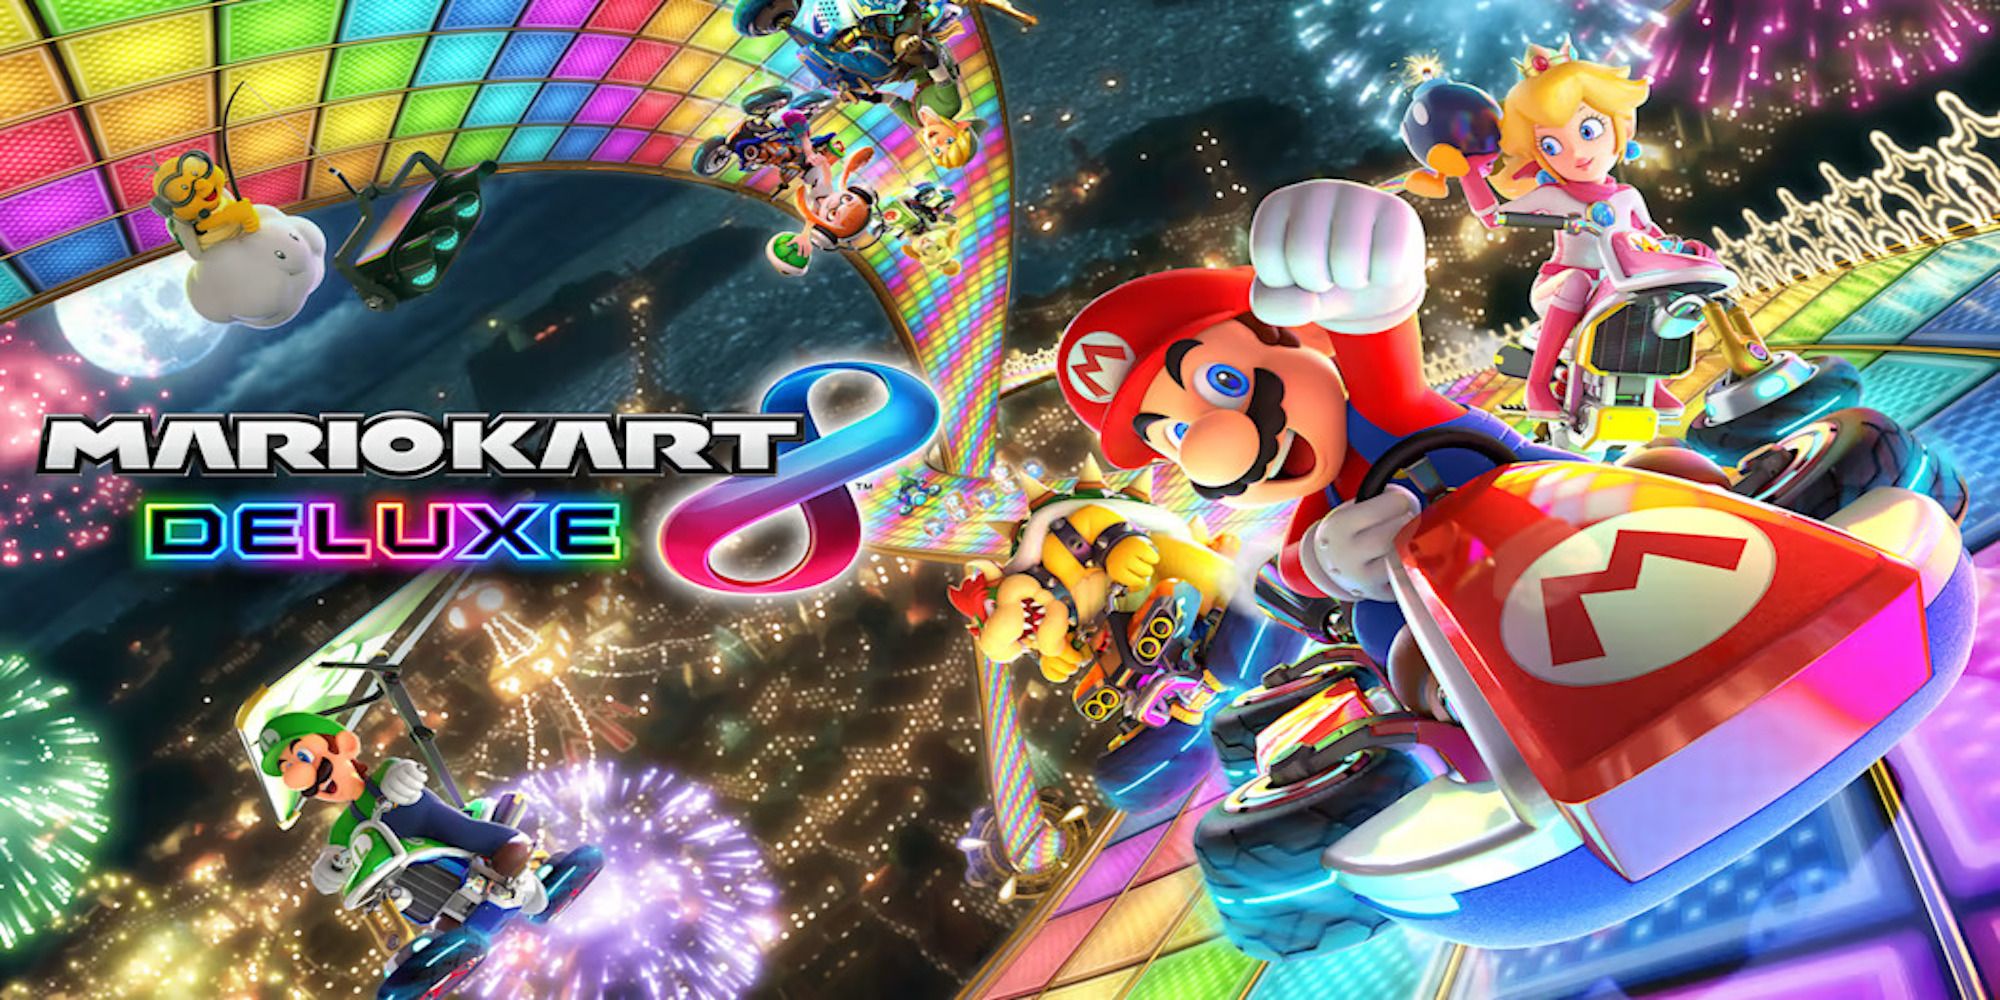 Title screen for Mario Kart 8 Deluxe